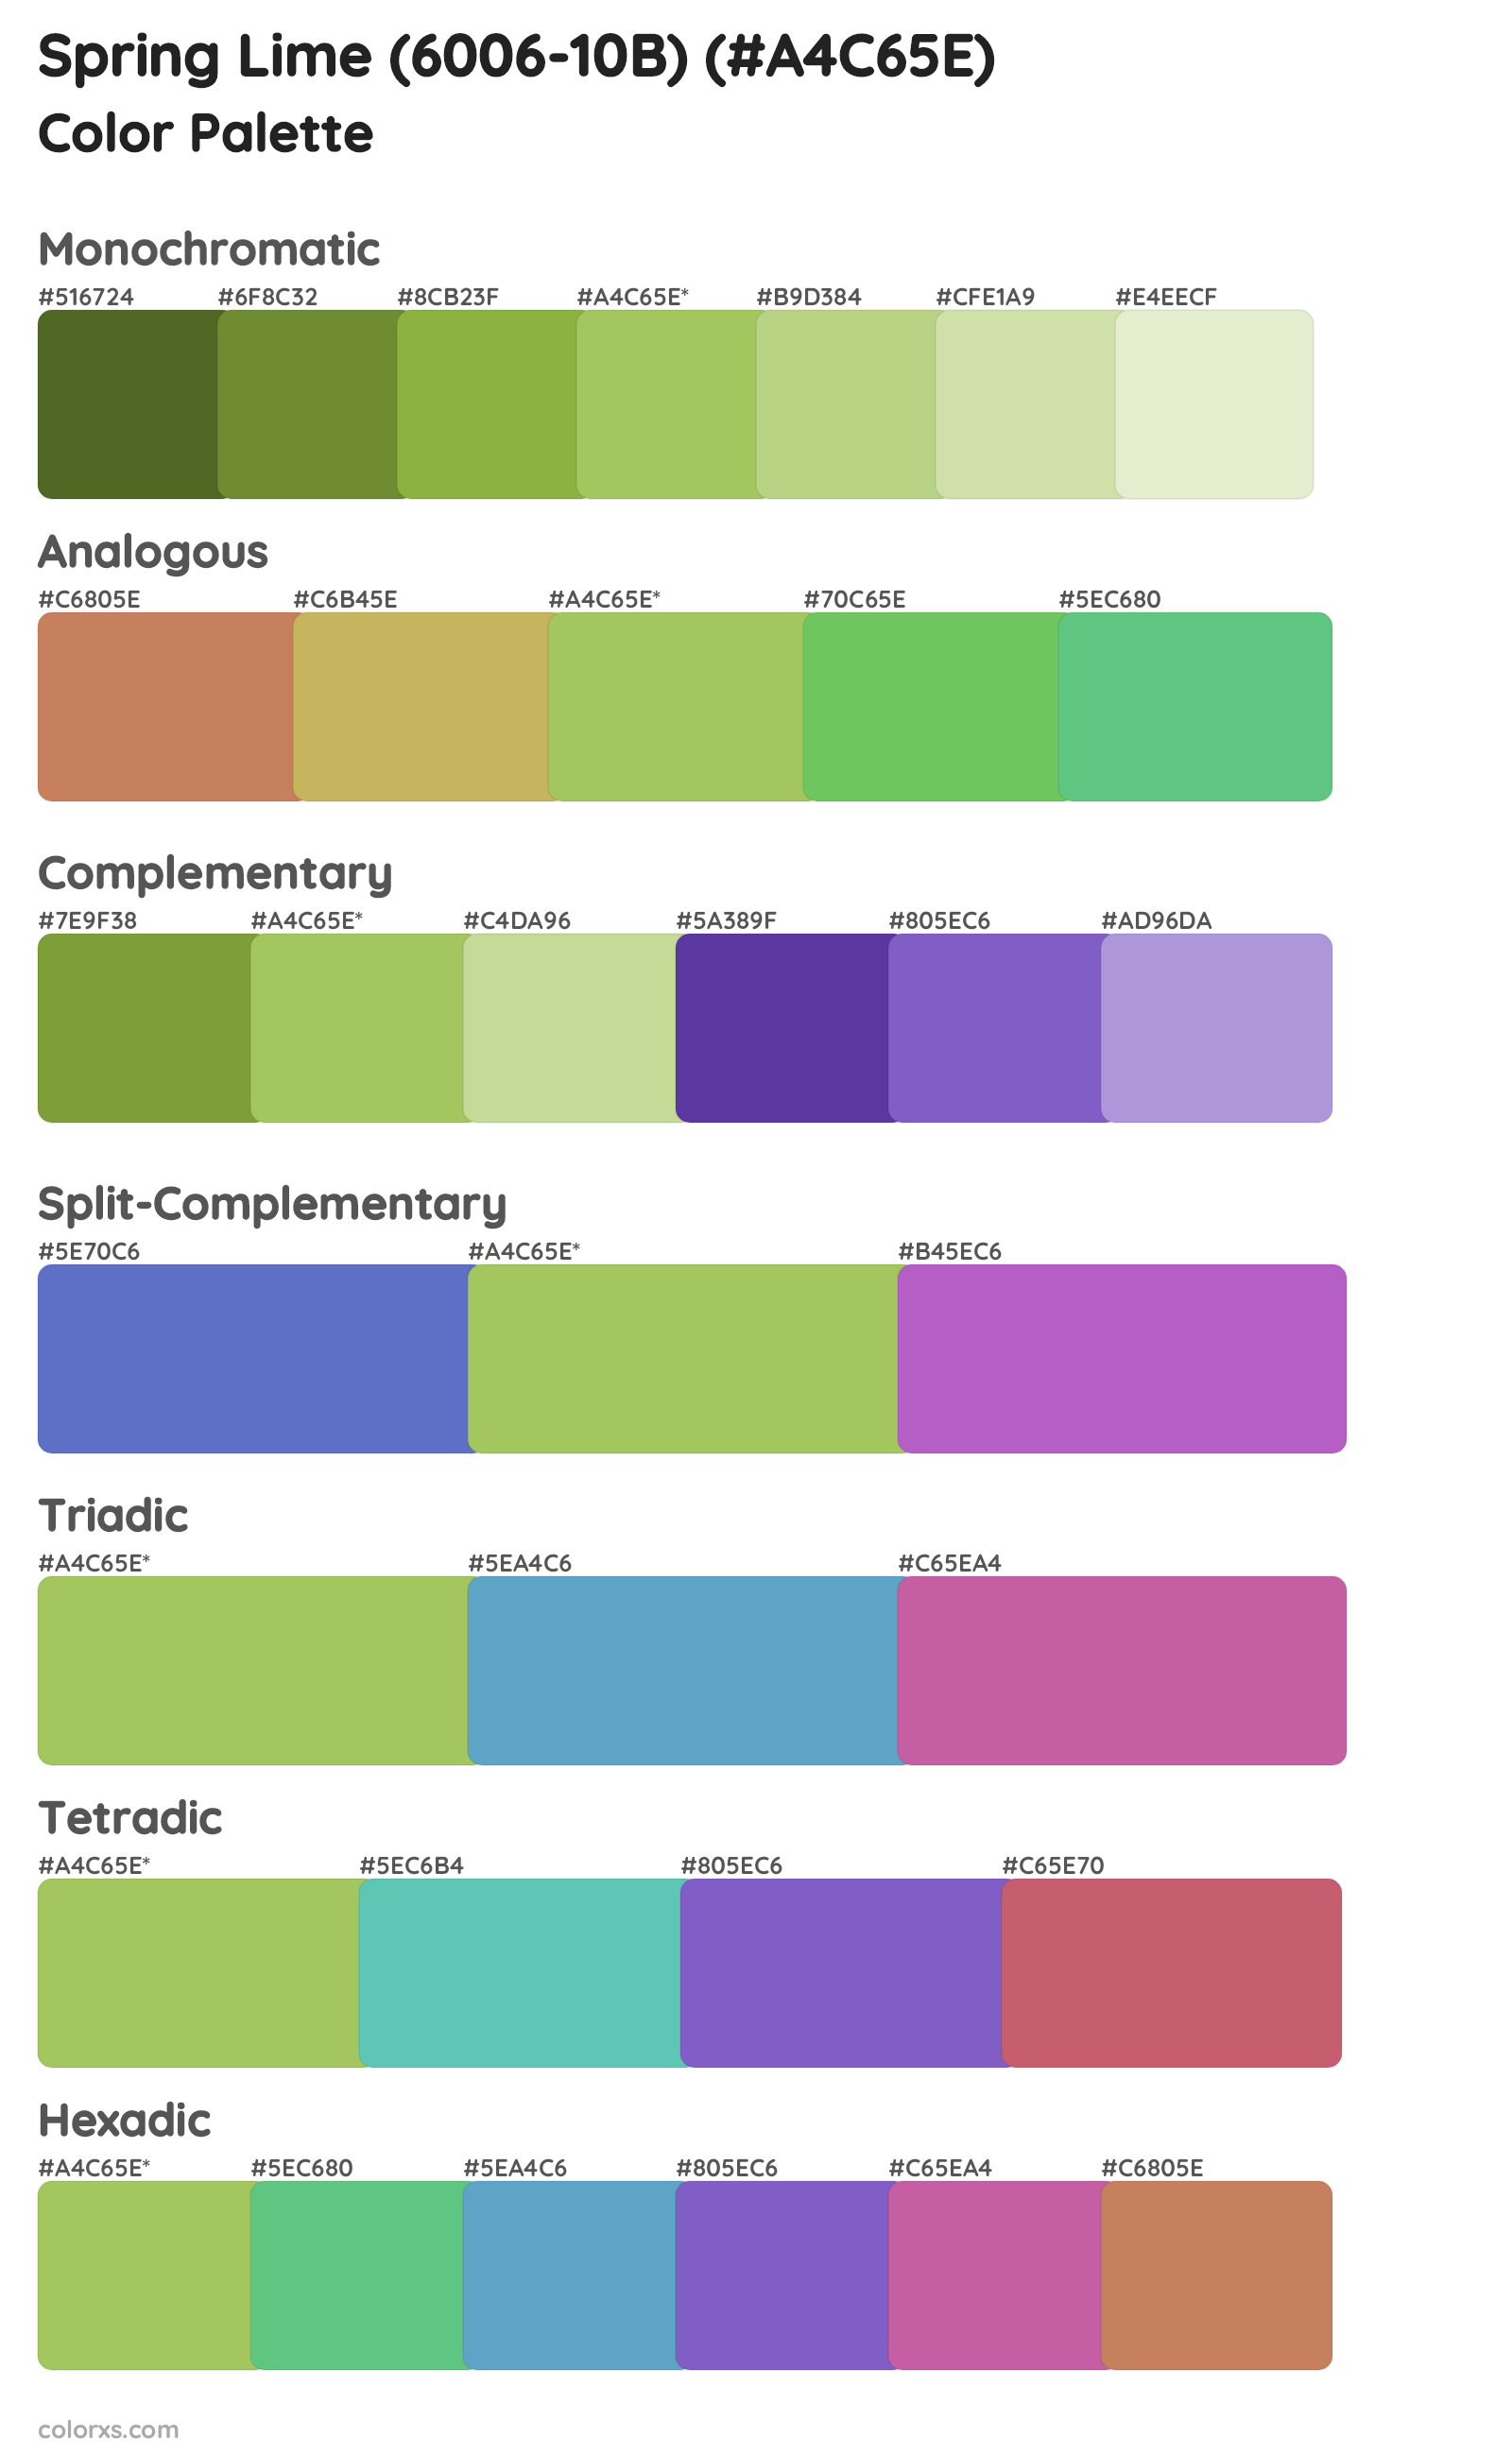 Spring Lime (6006-10B) Color Scheme Palettes